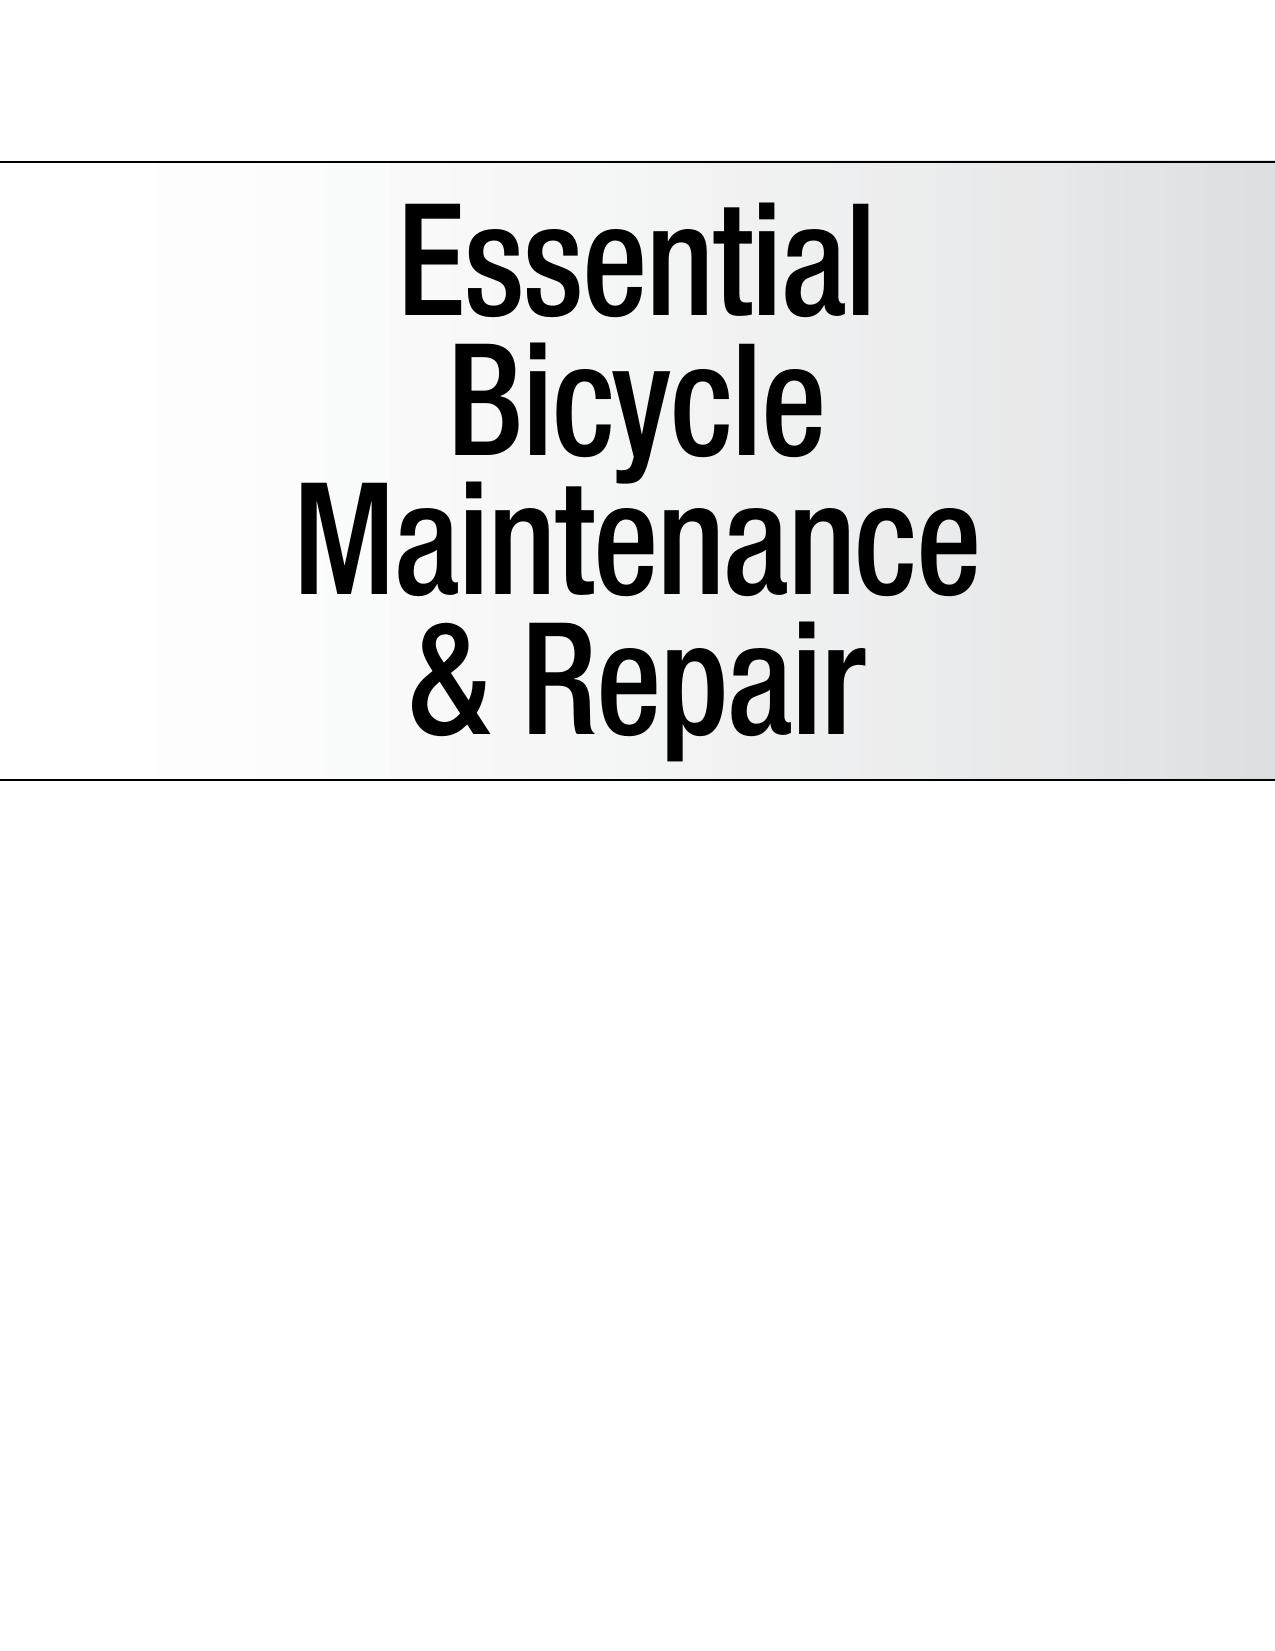 Essential Bicycle Maintenance & Repair by Daimeon Shanks